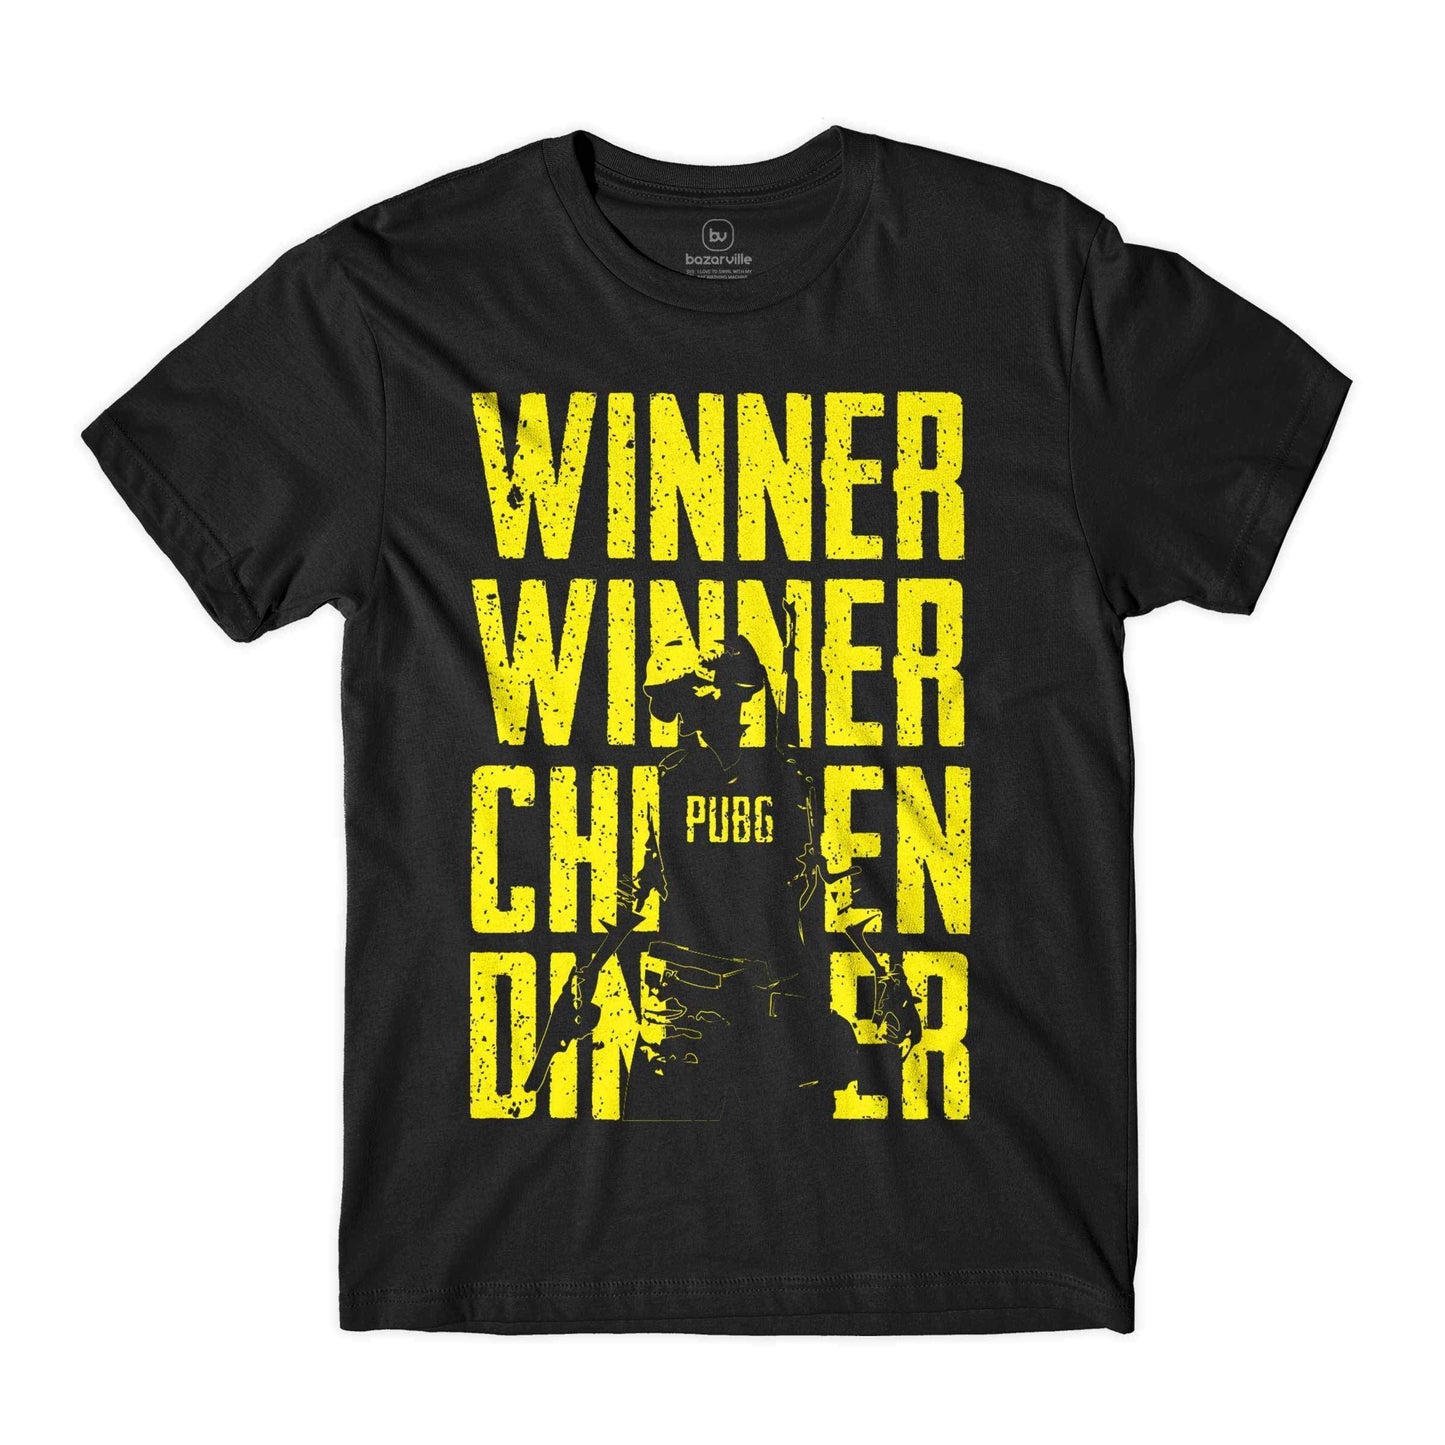 Bazarville Customer S / Black PubG - Winner Winner Chicken Dinner - Boy